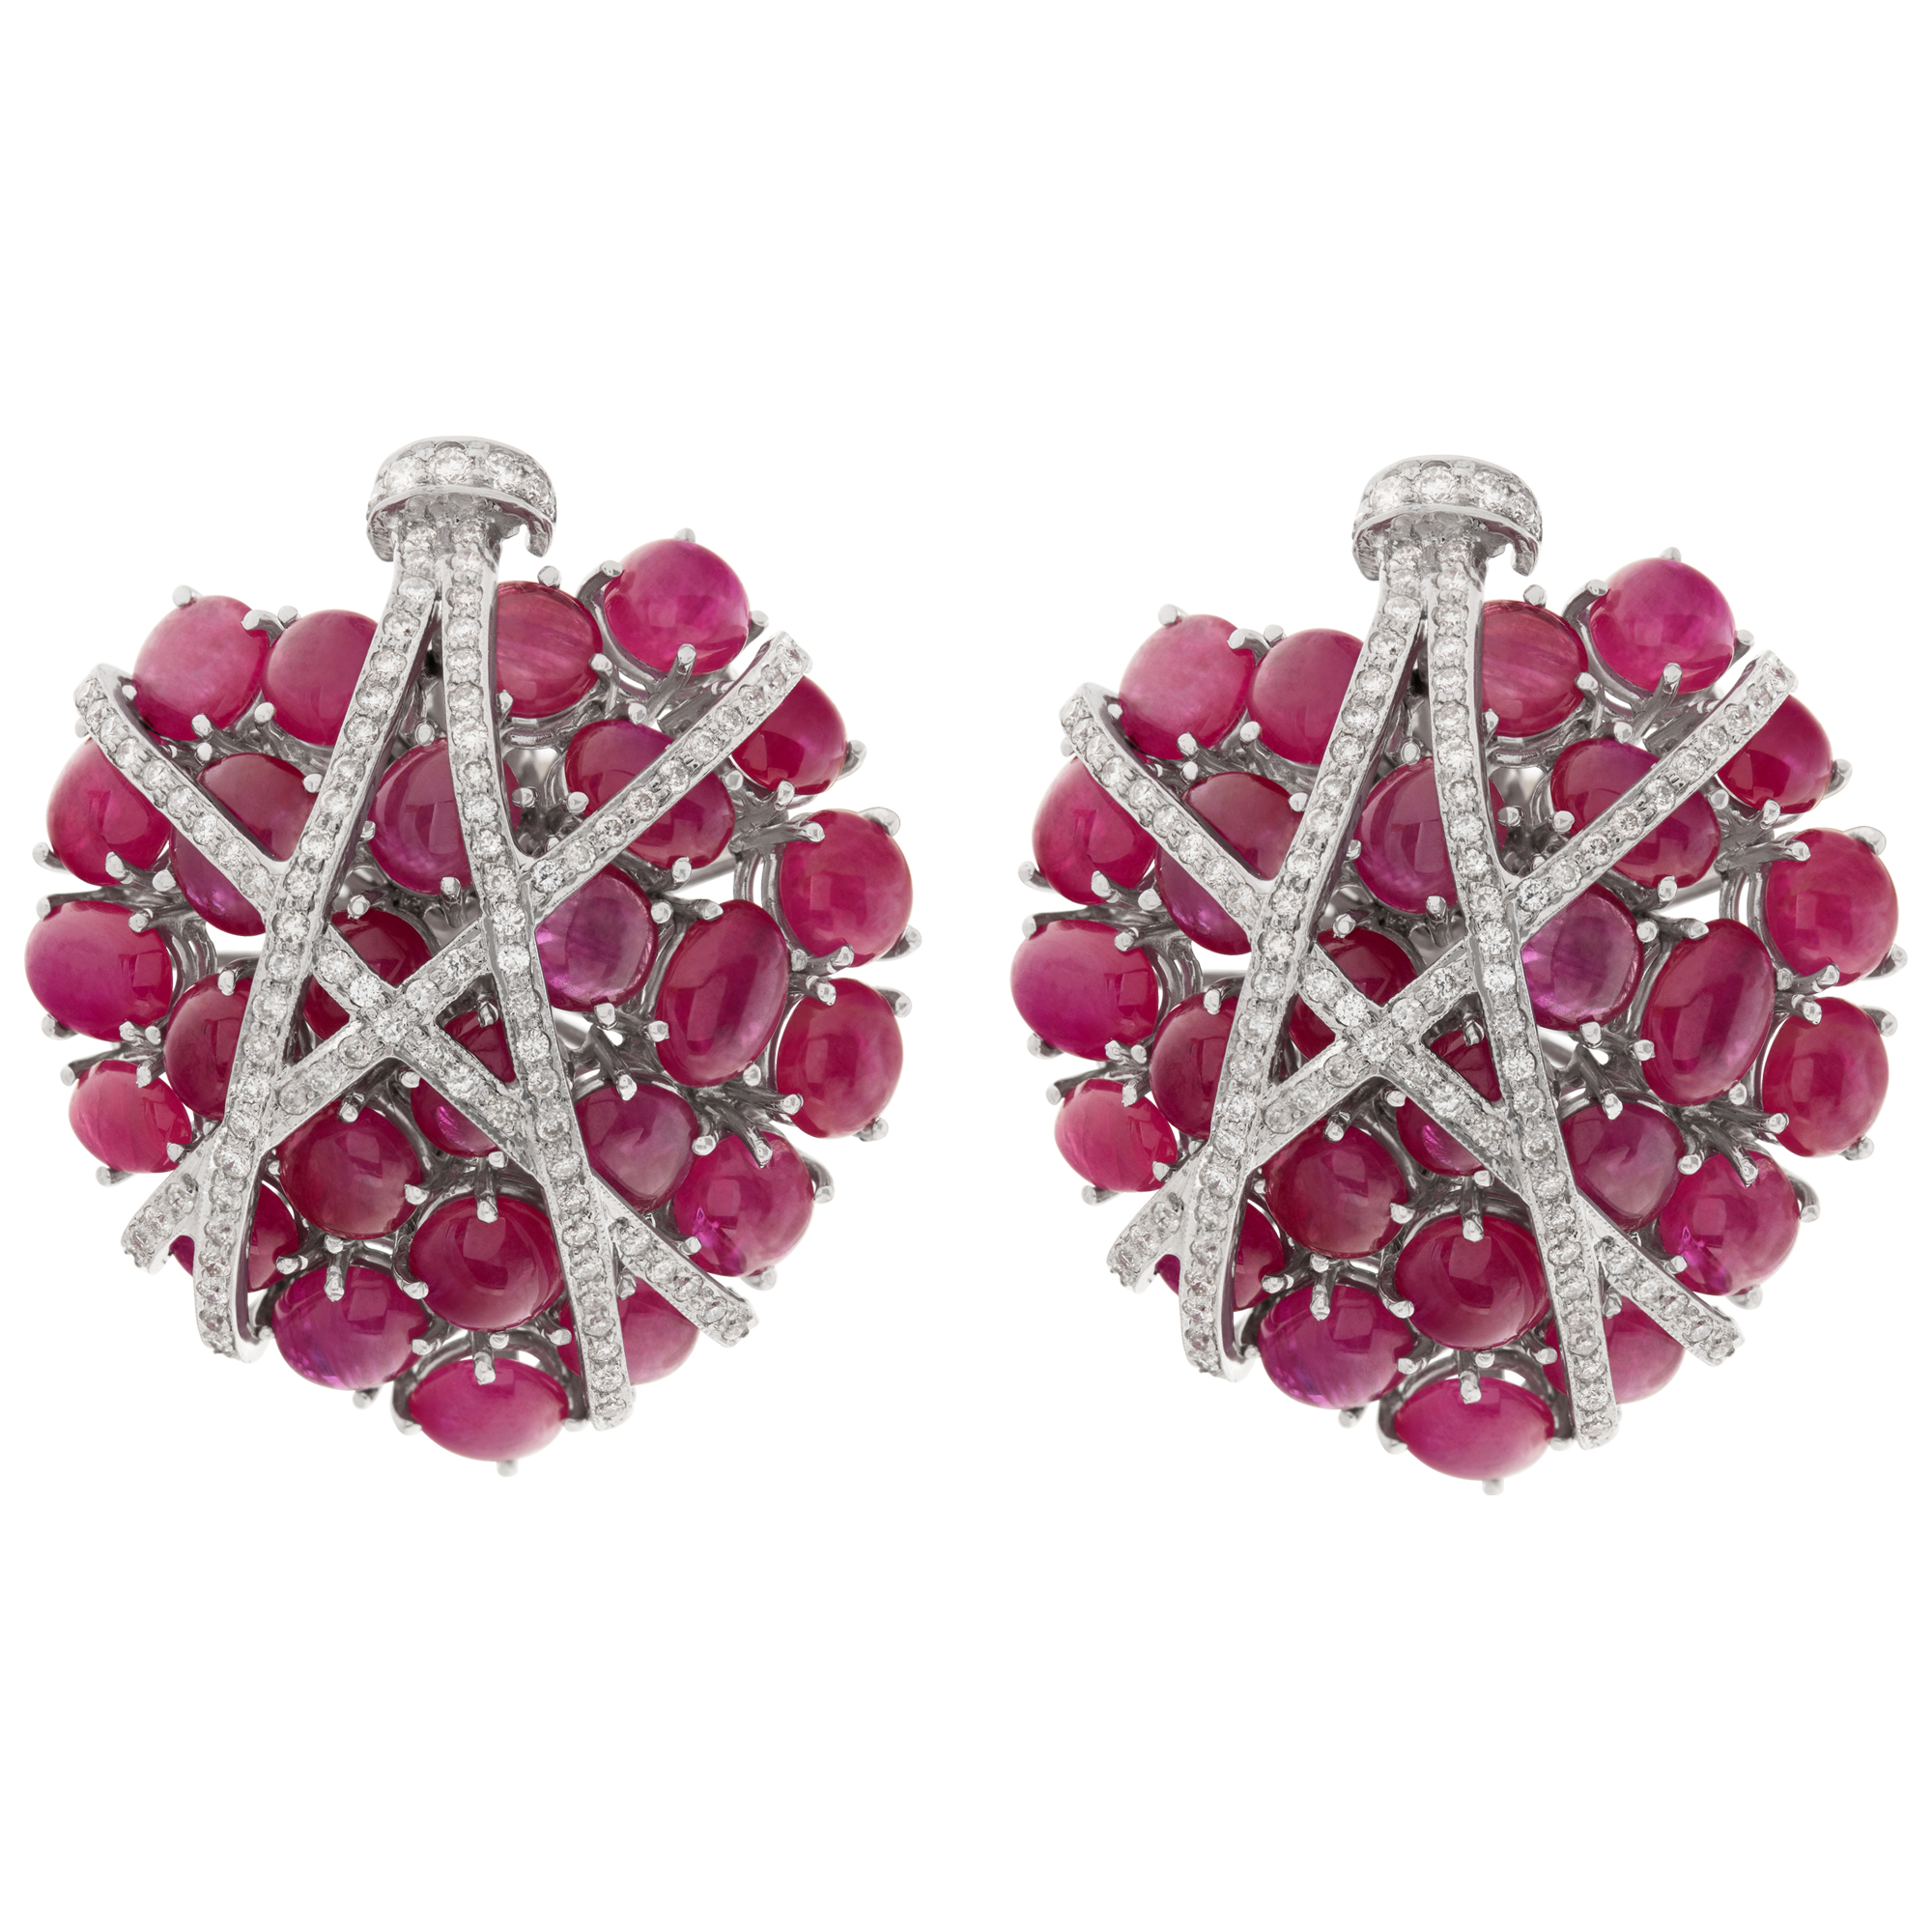 Ruby and diamond earrings in 18k image 1